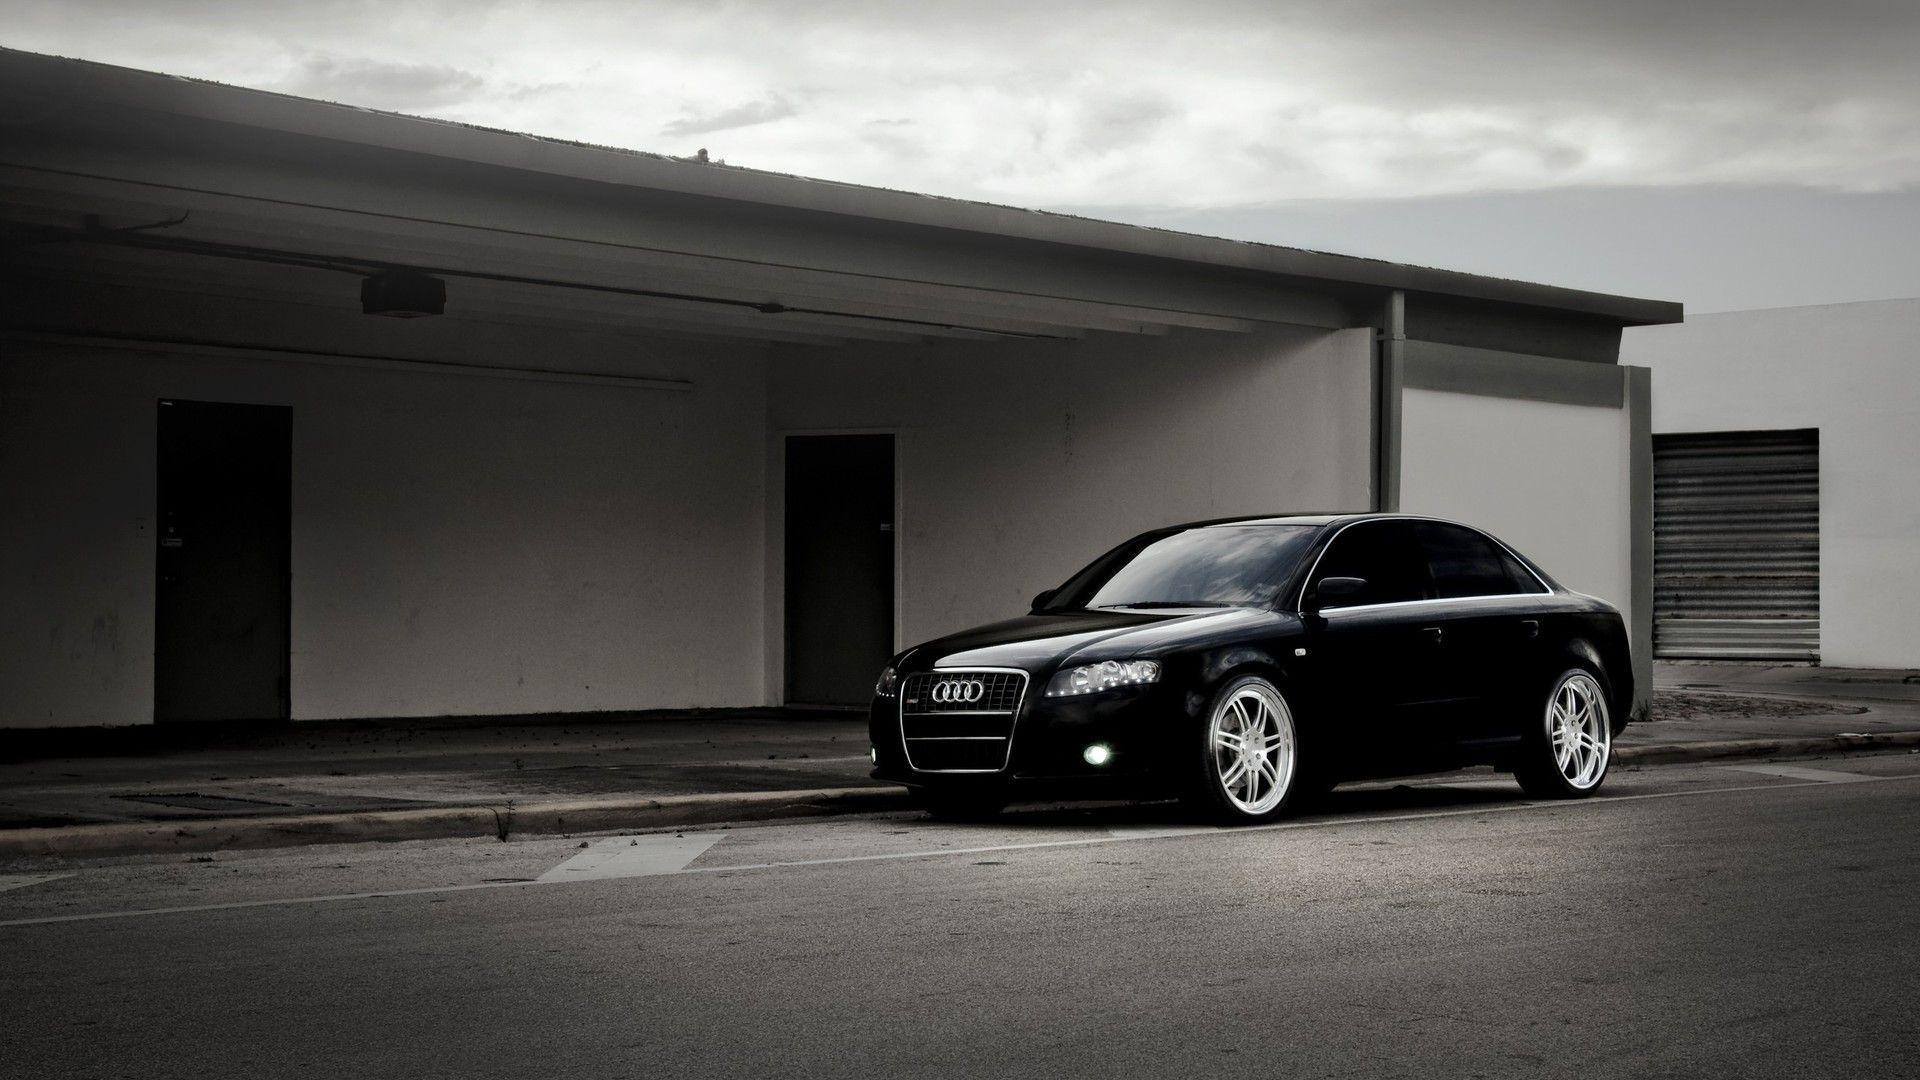 Audi A4 Wallpaper High Quality Resolution, Cars Wallpaper